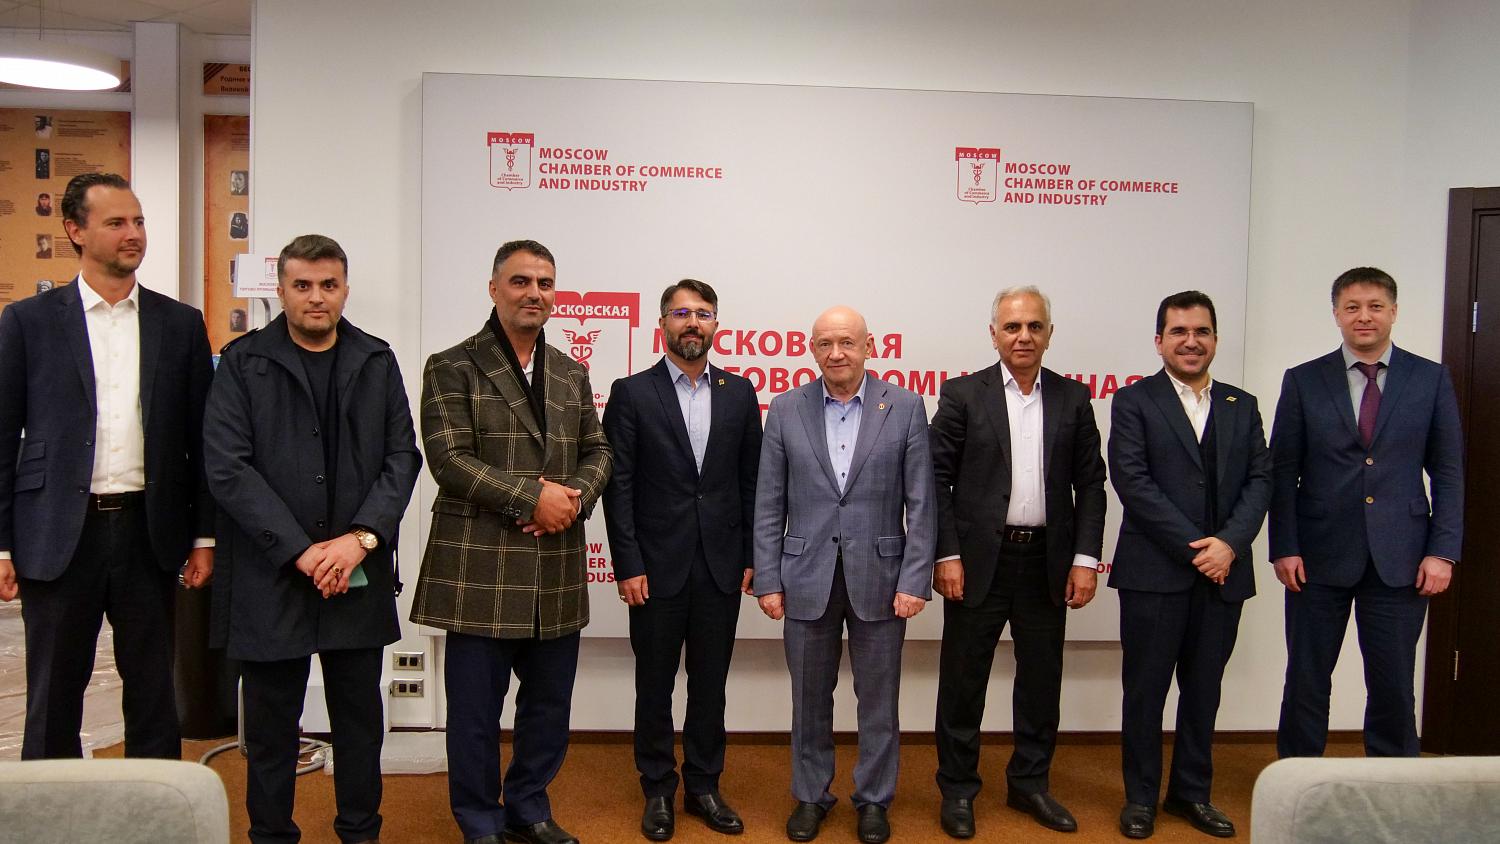 Representatives of free economic zones of Iran visited the MCCI